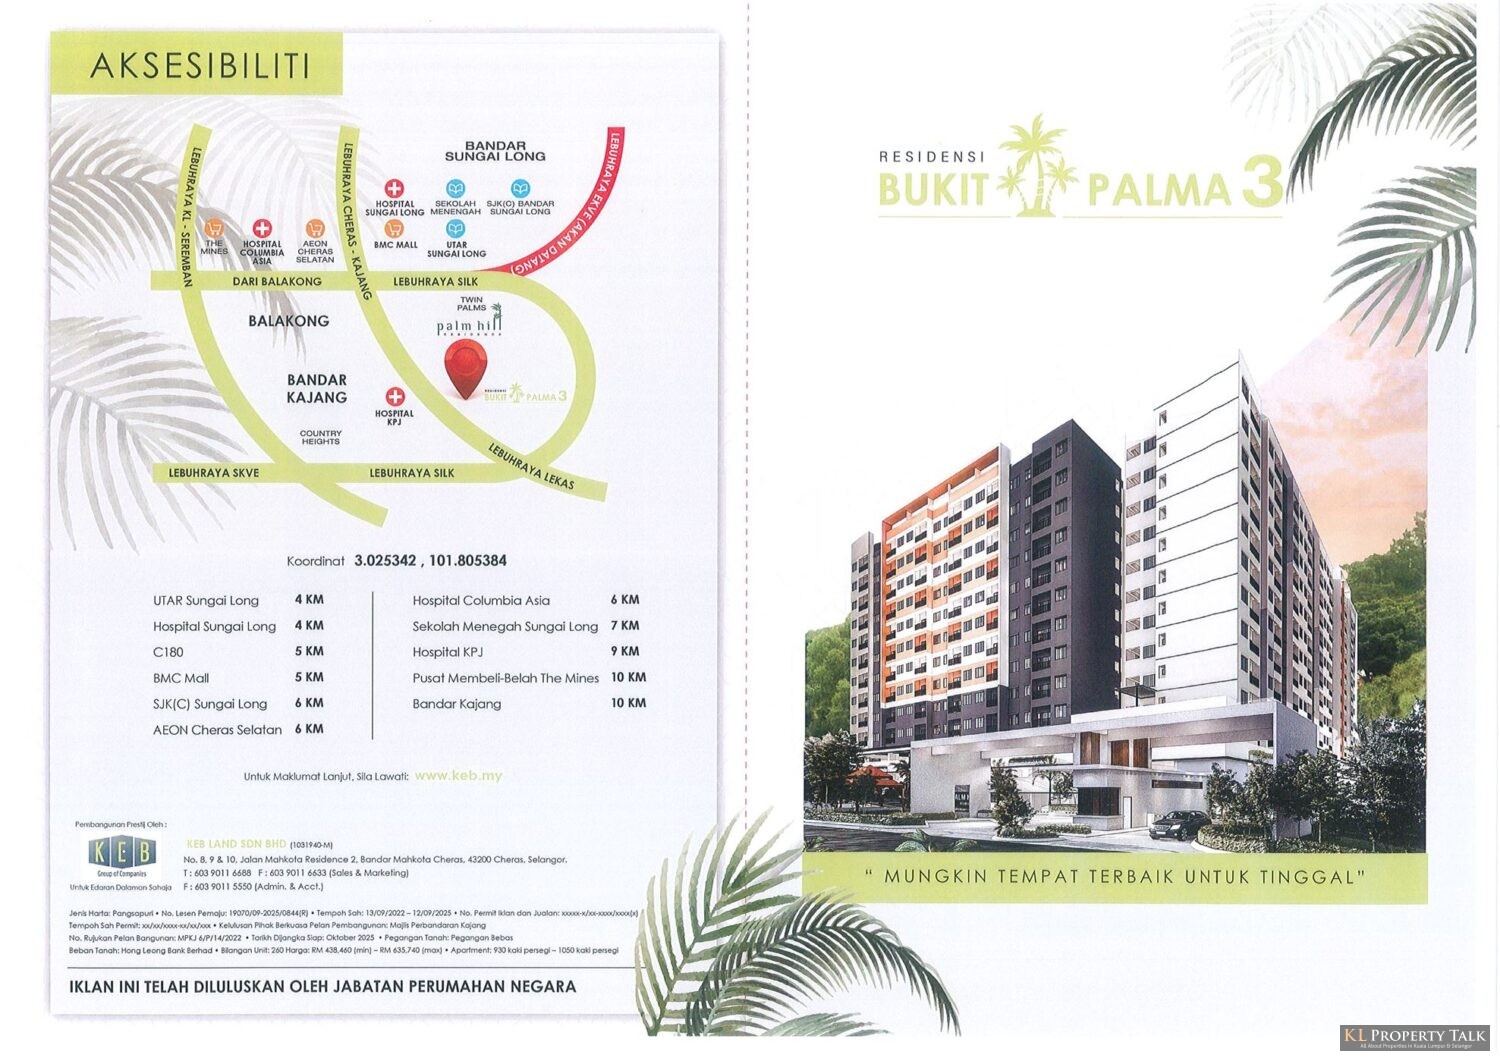 Bukit Palma 3 Residences